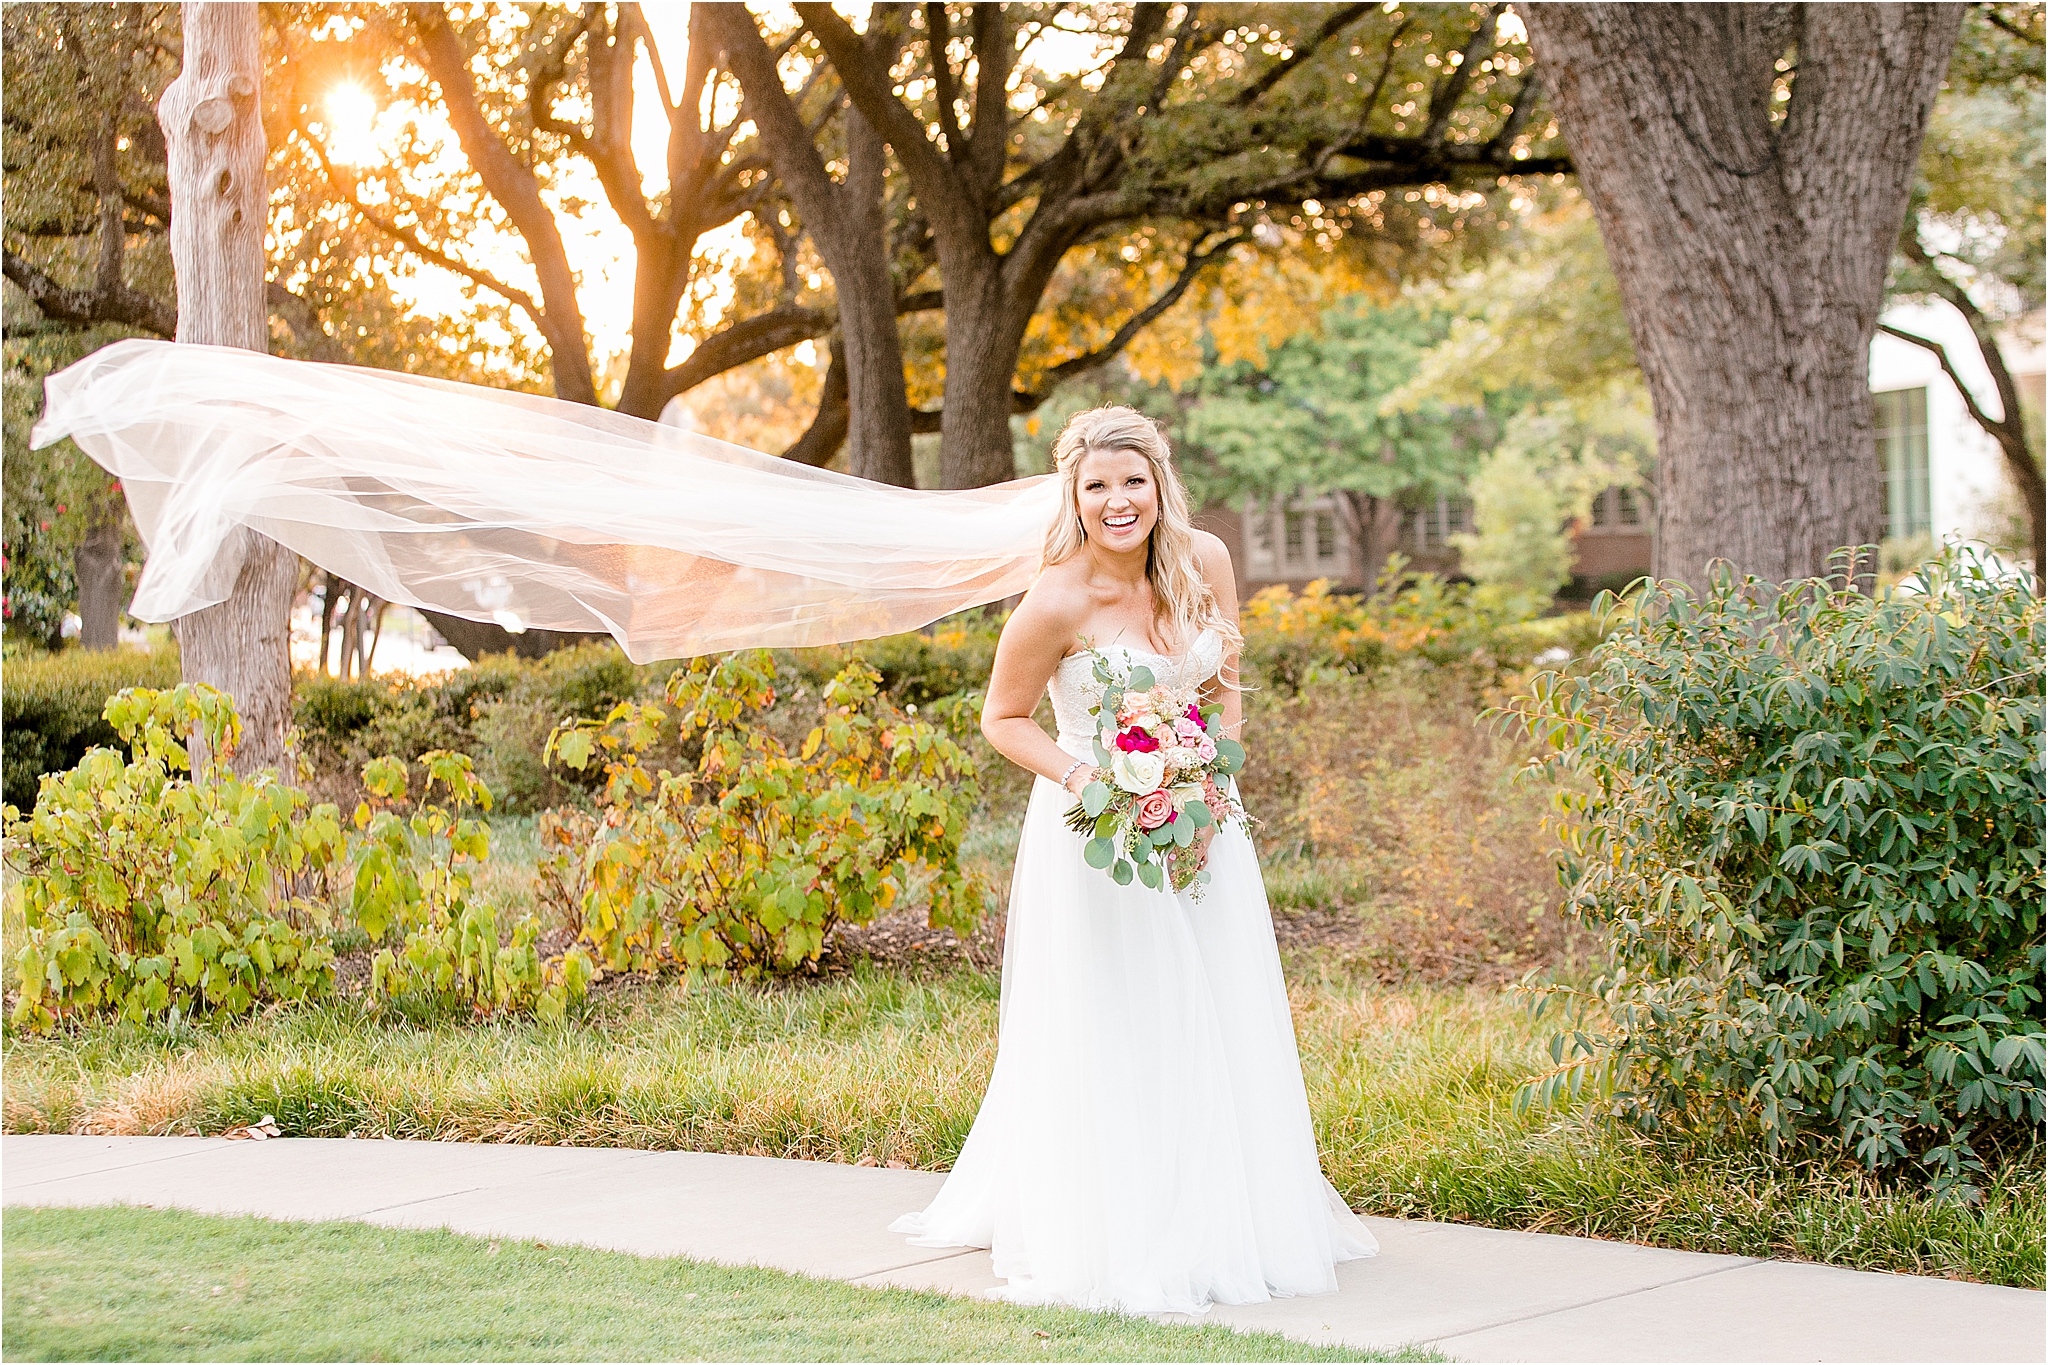 Joyous Bridal Session in HIghland Park Dallas, Texas